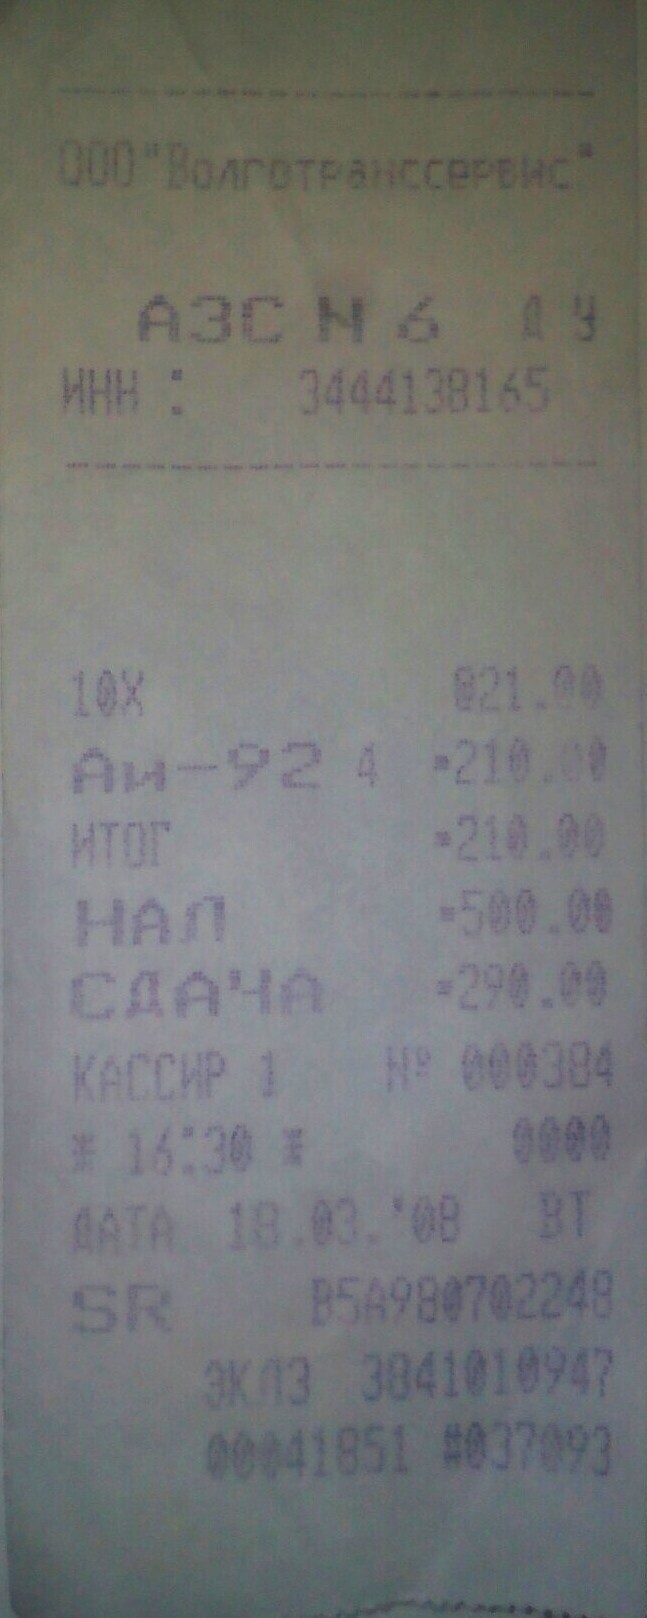 Март 2008 года и 21 рубль за литр 92-го